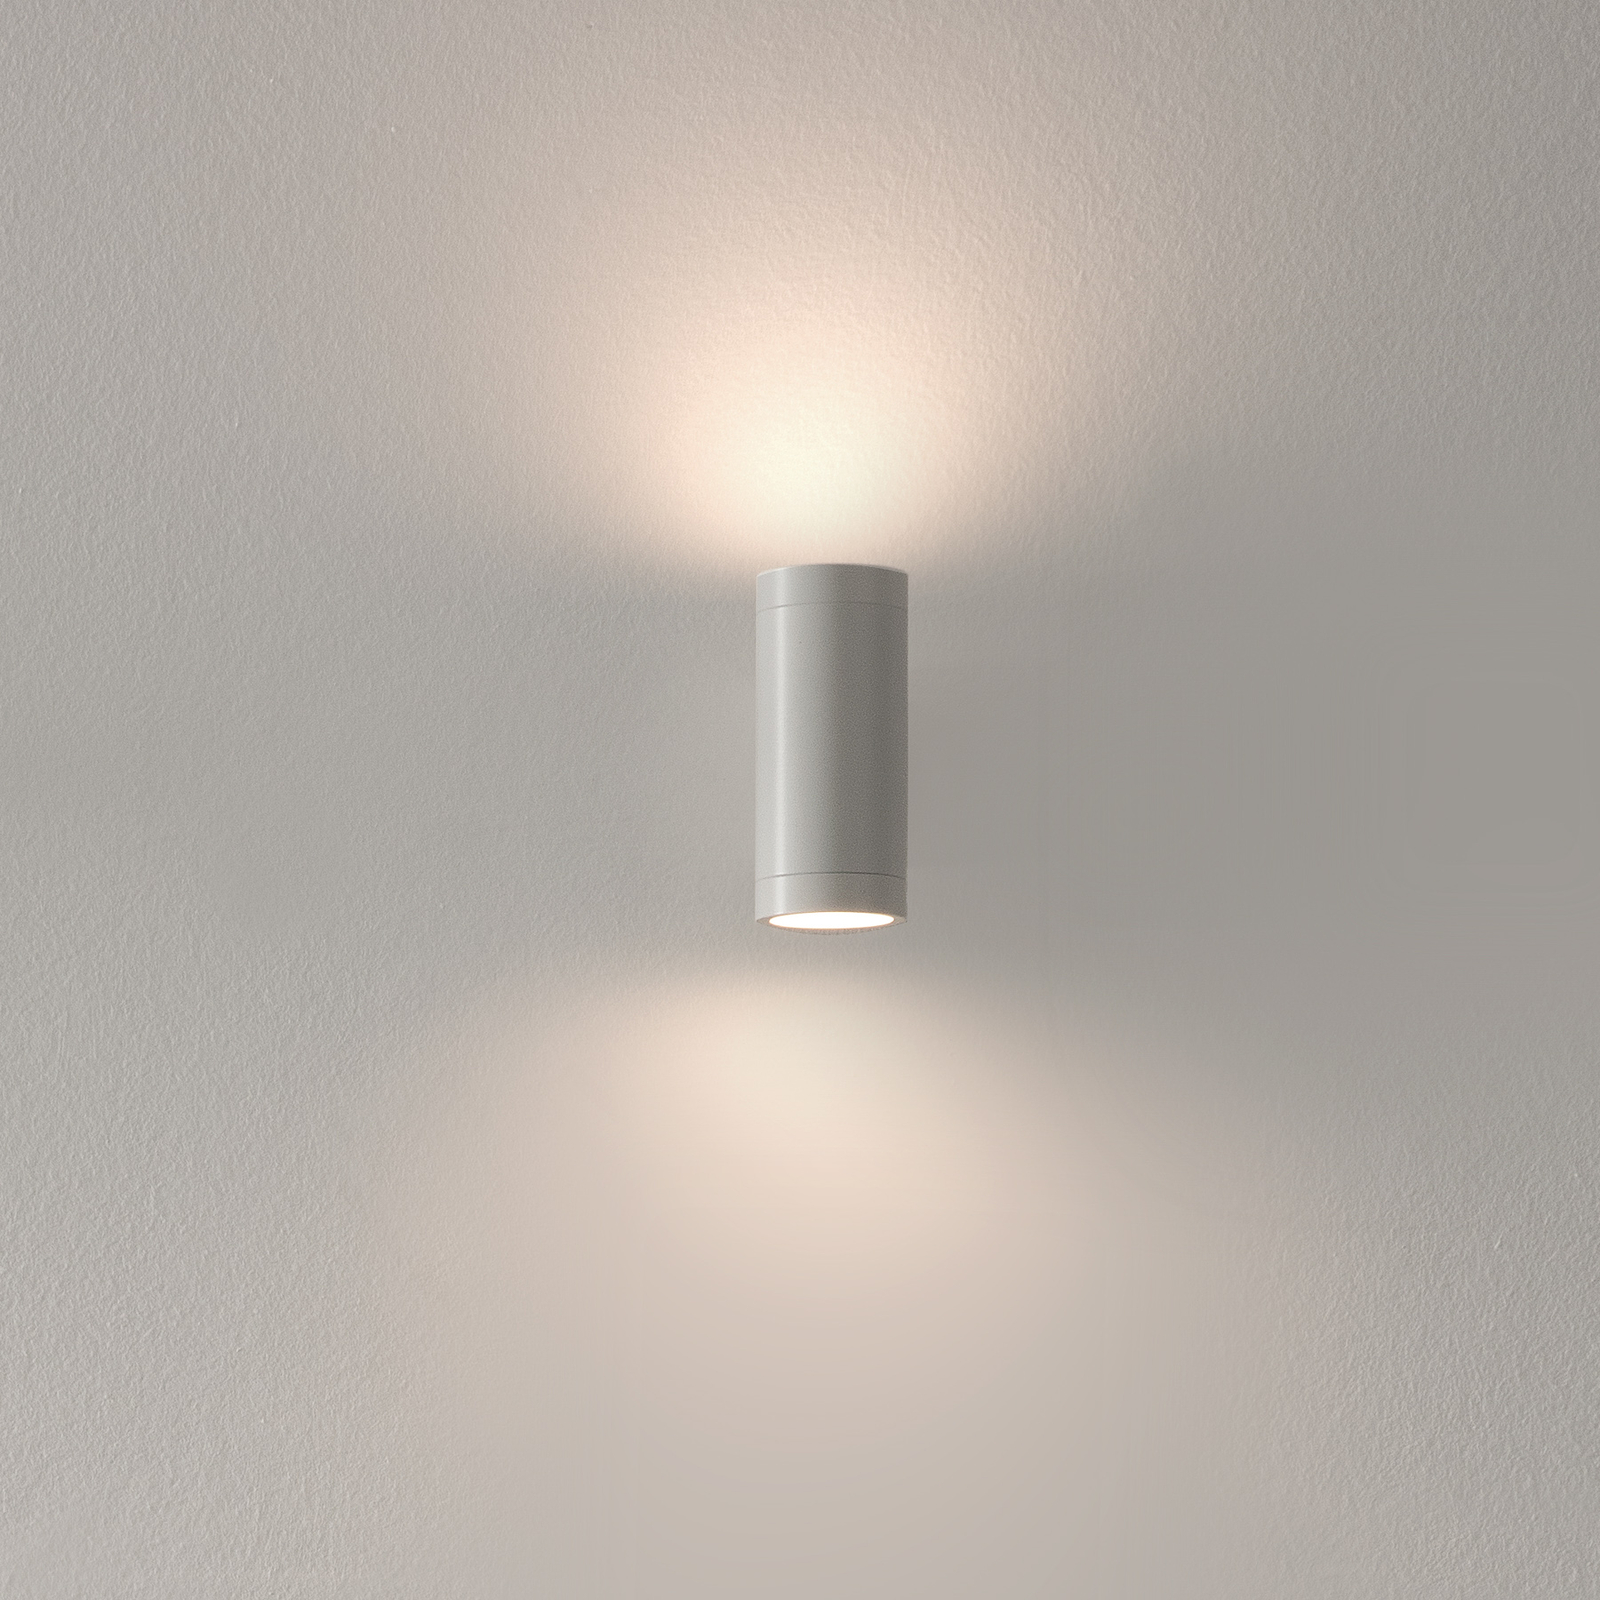 Karman Movida LED wall light 2,700 K white